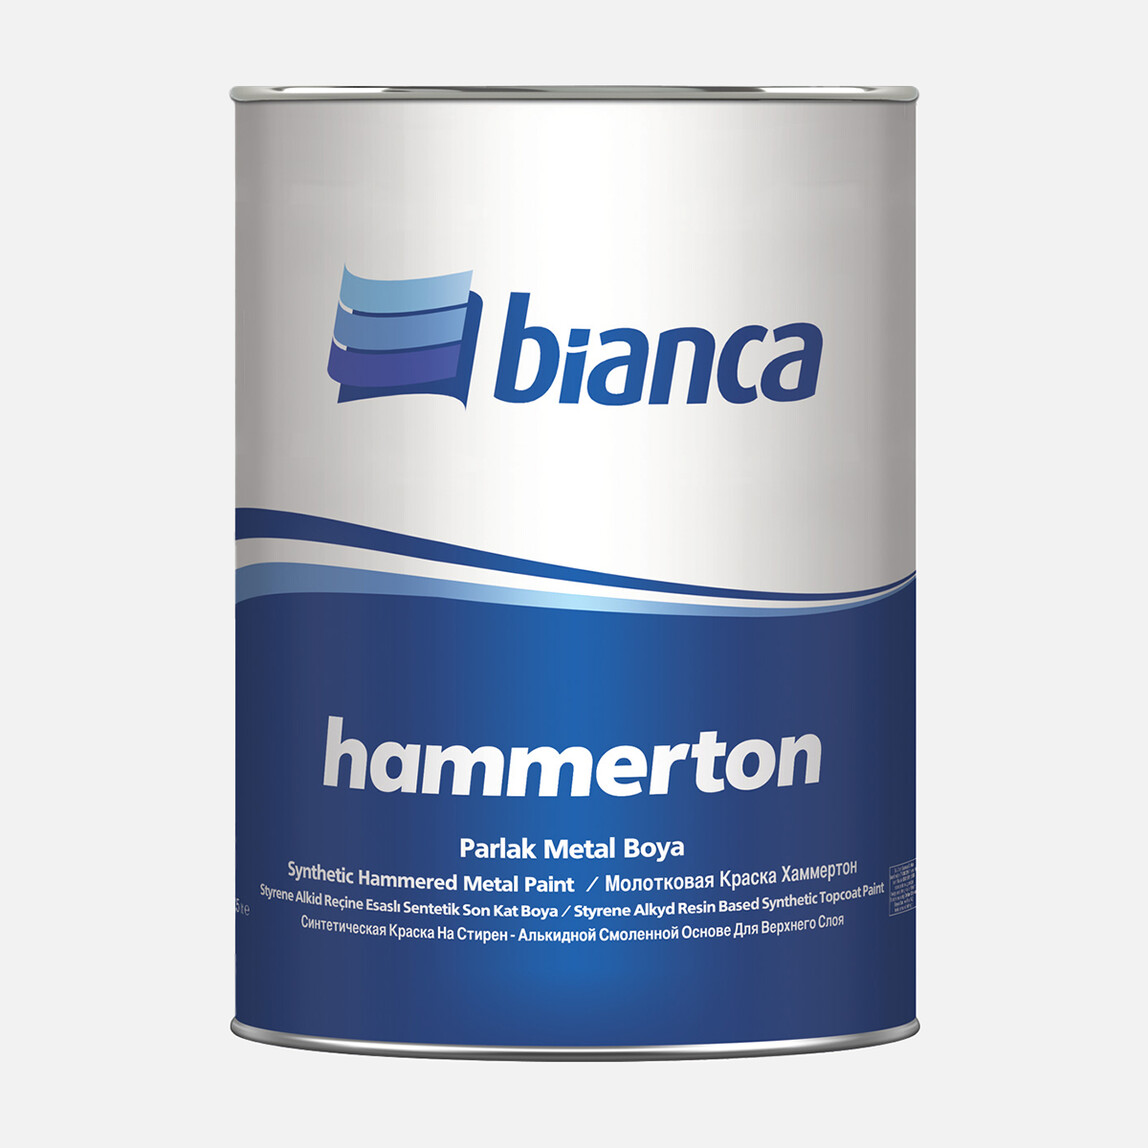    Bianca 0,75 L Hammerton Elegant Boya Haki Yeşil  